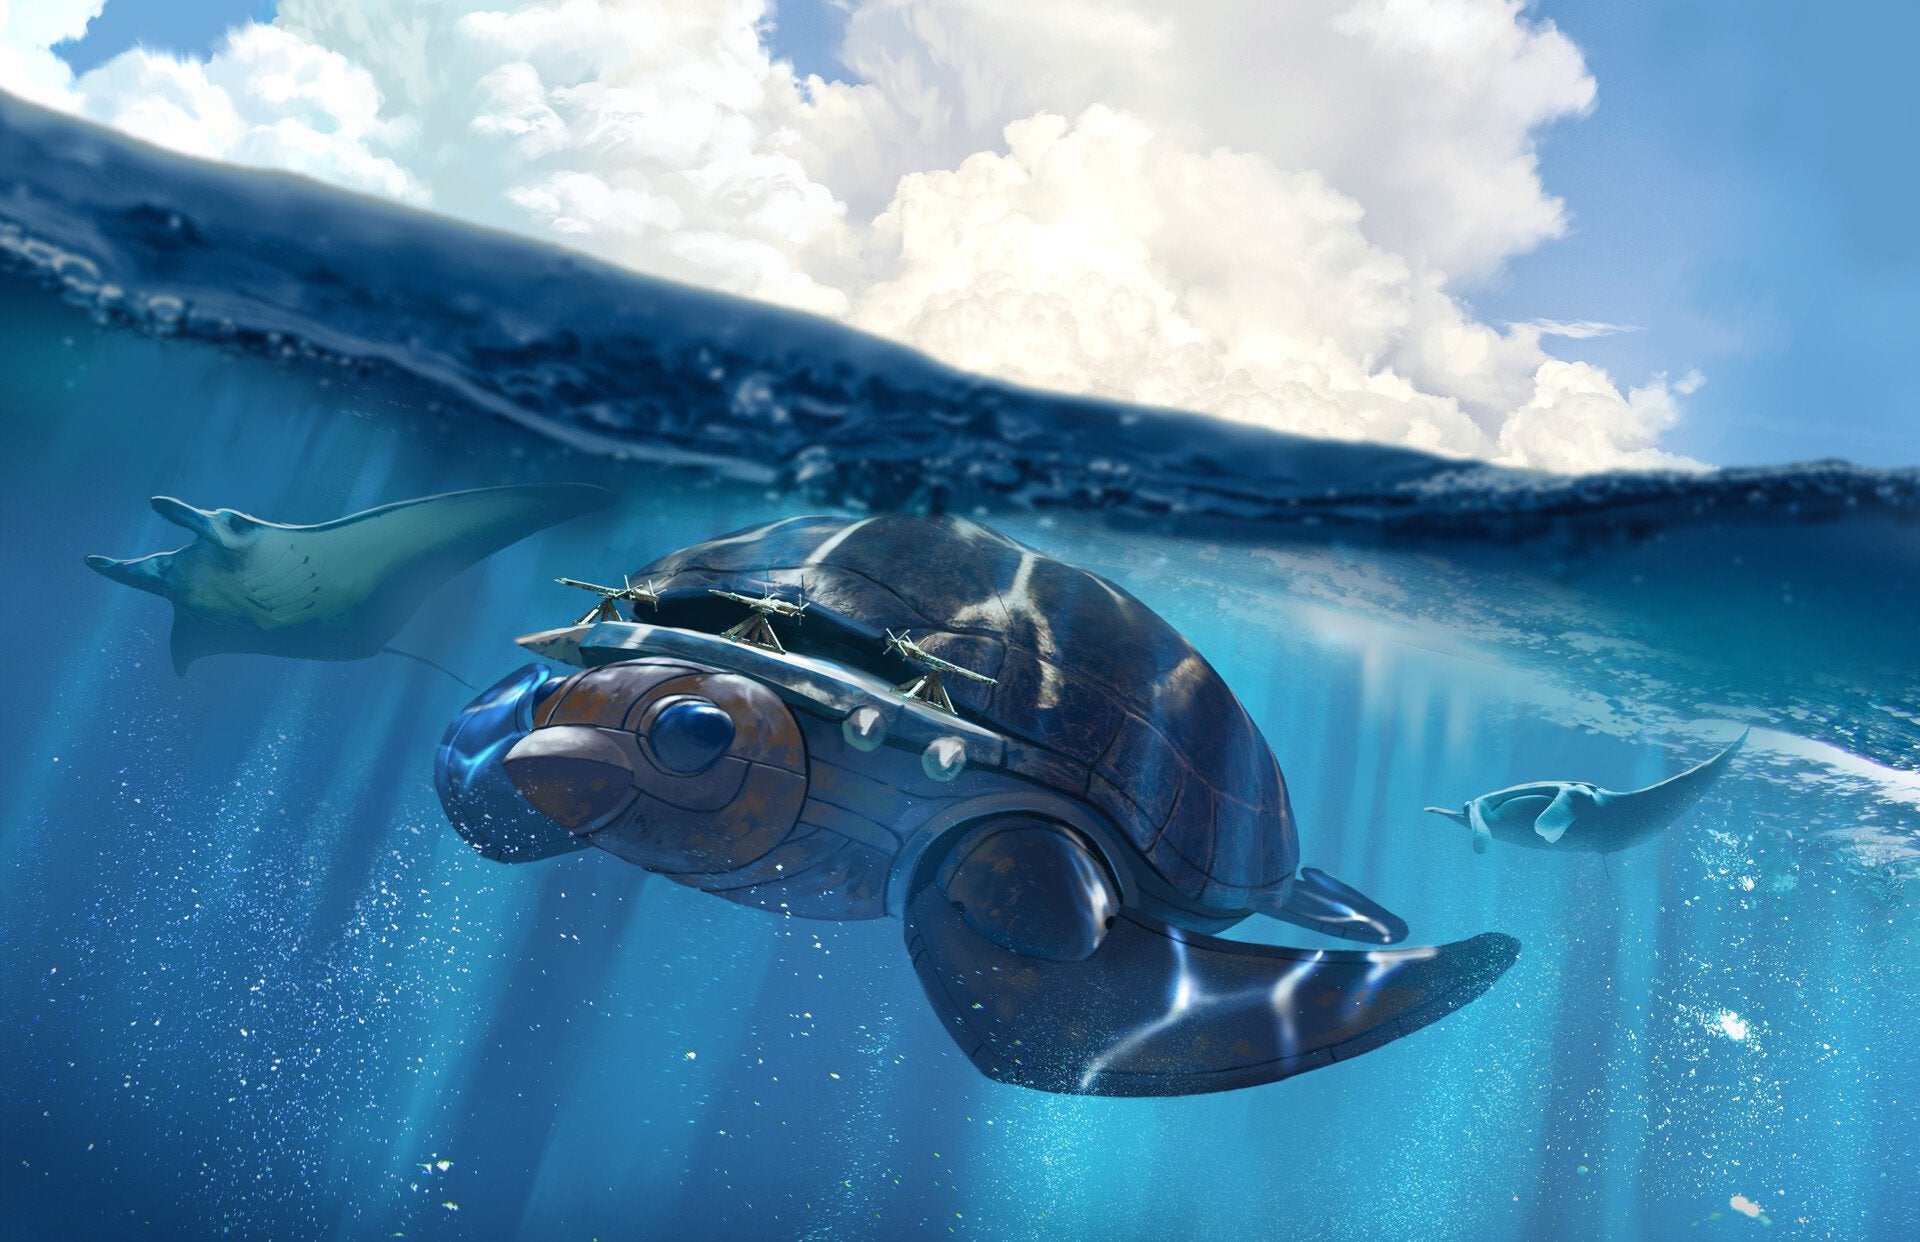 Turtle Ship by Alfven Ato